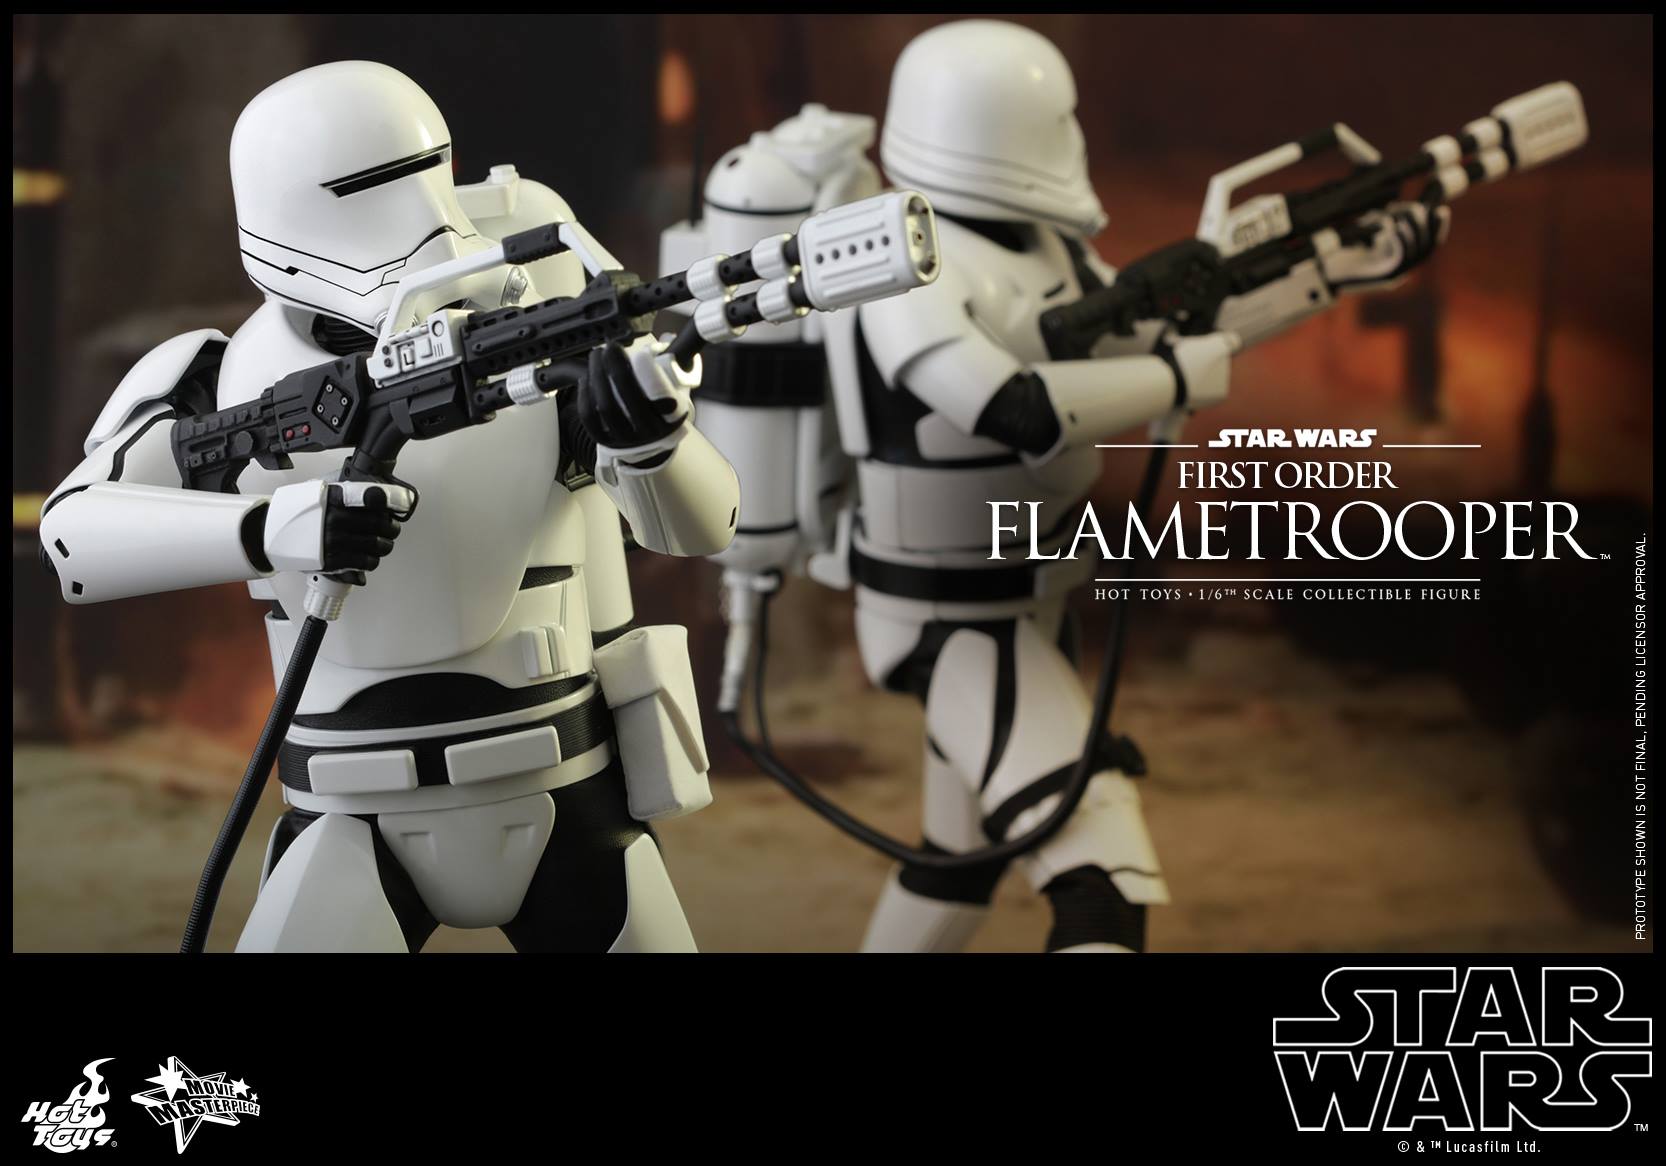 Star Wars: The Force Awakens Hot Toys Flametrooper